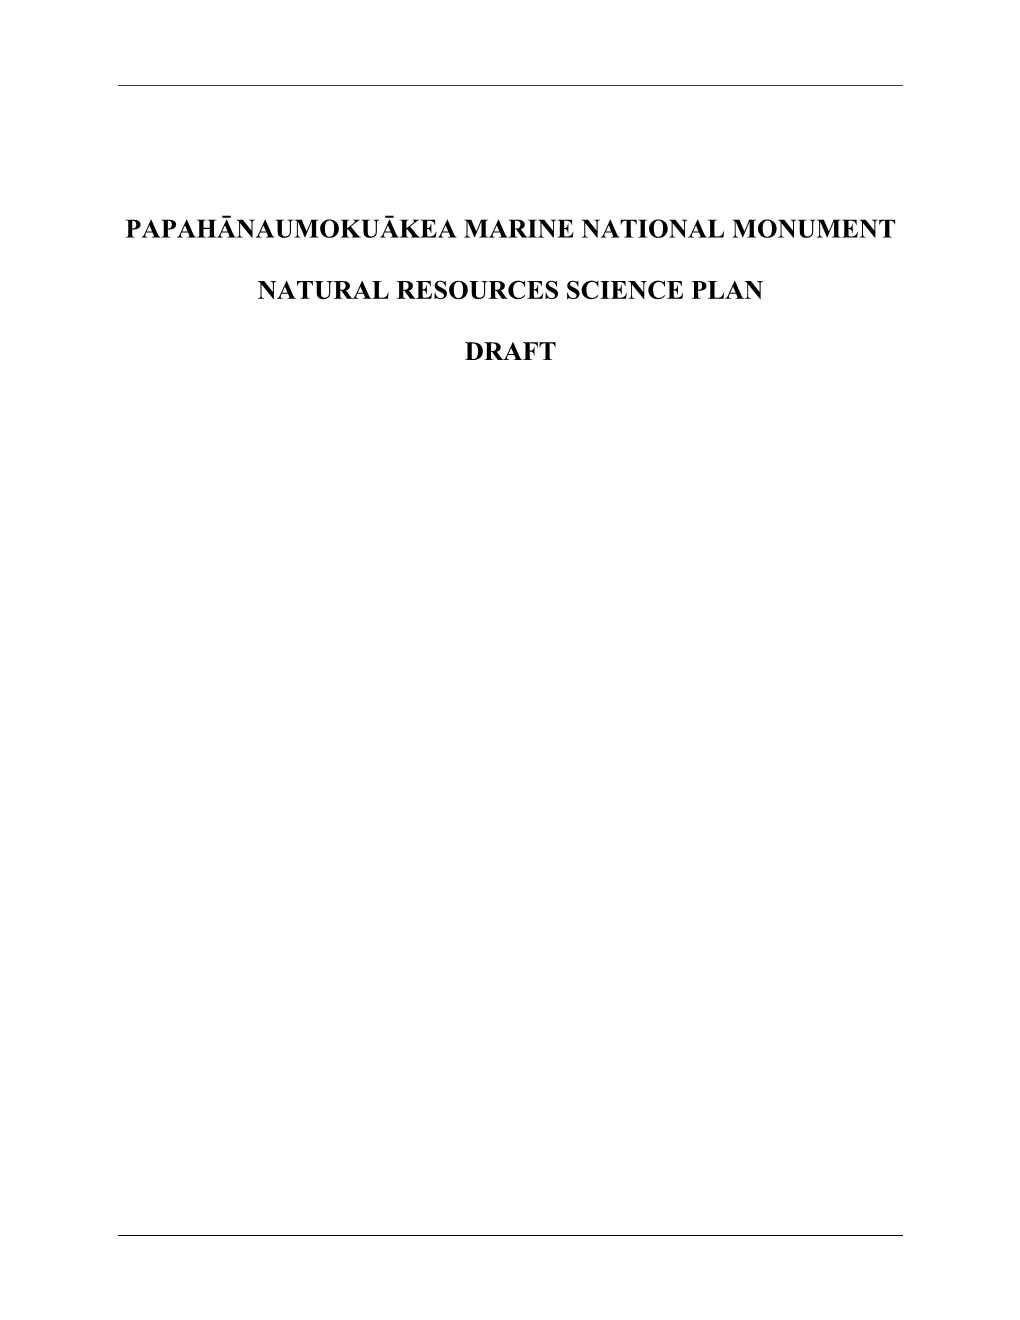 Papahānaumokuākea Marine National Monument Natural Resources Science Plan Draft